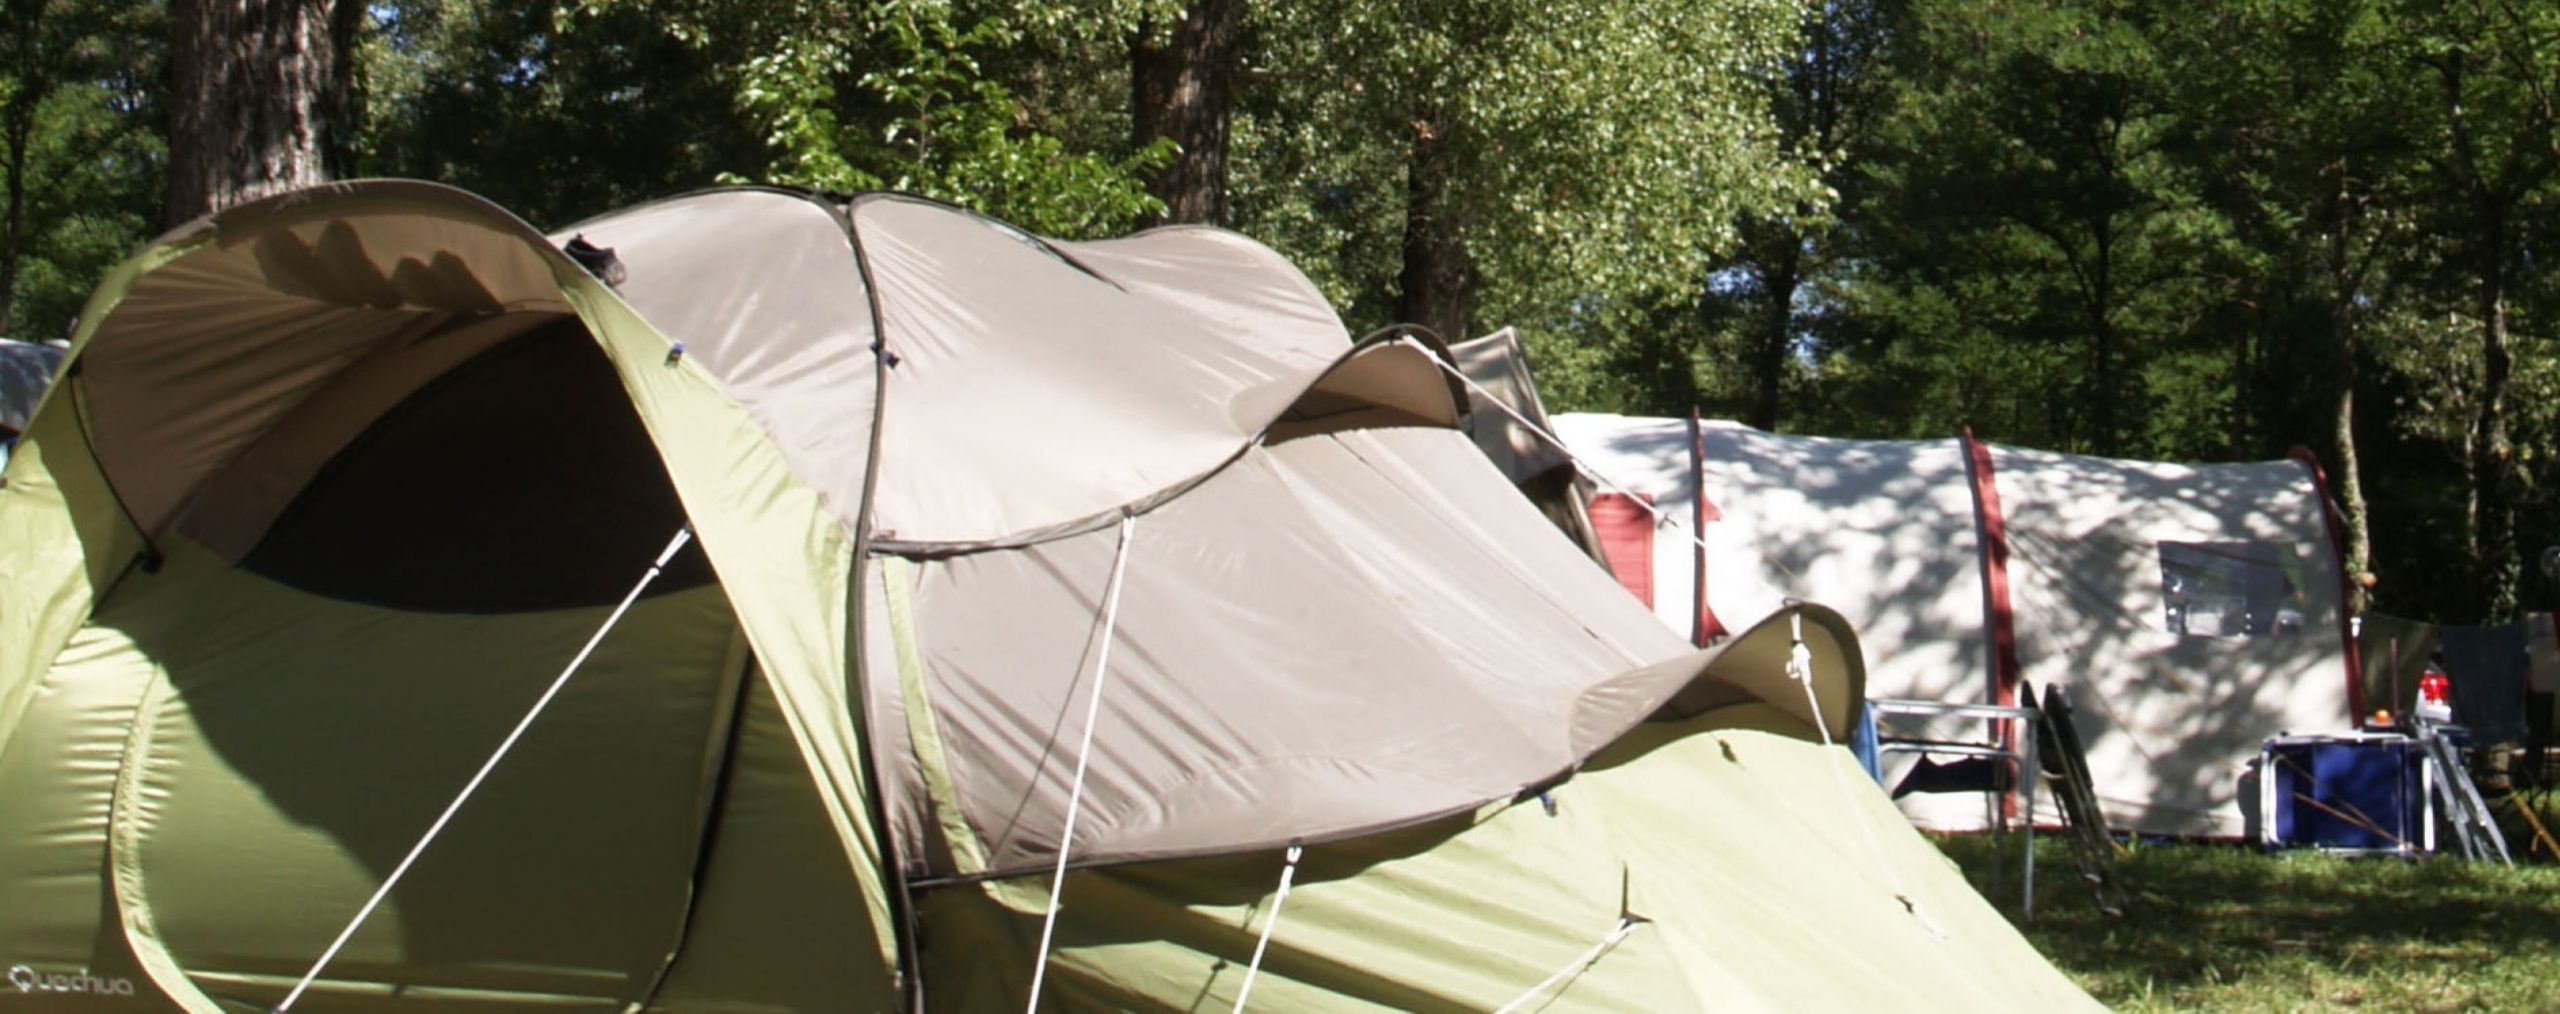 Emplacements de camping au camping 3 étoiles acacias